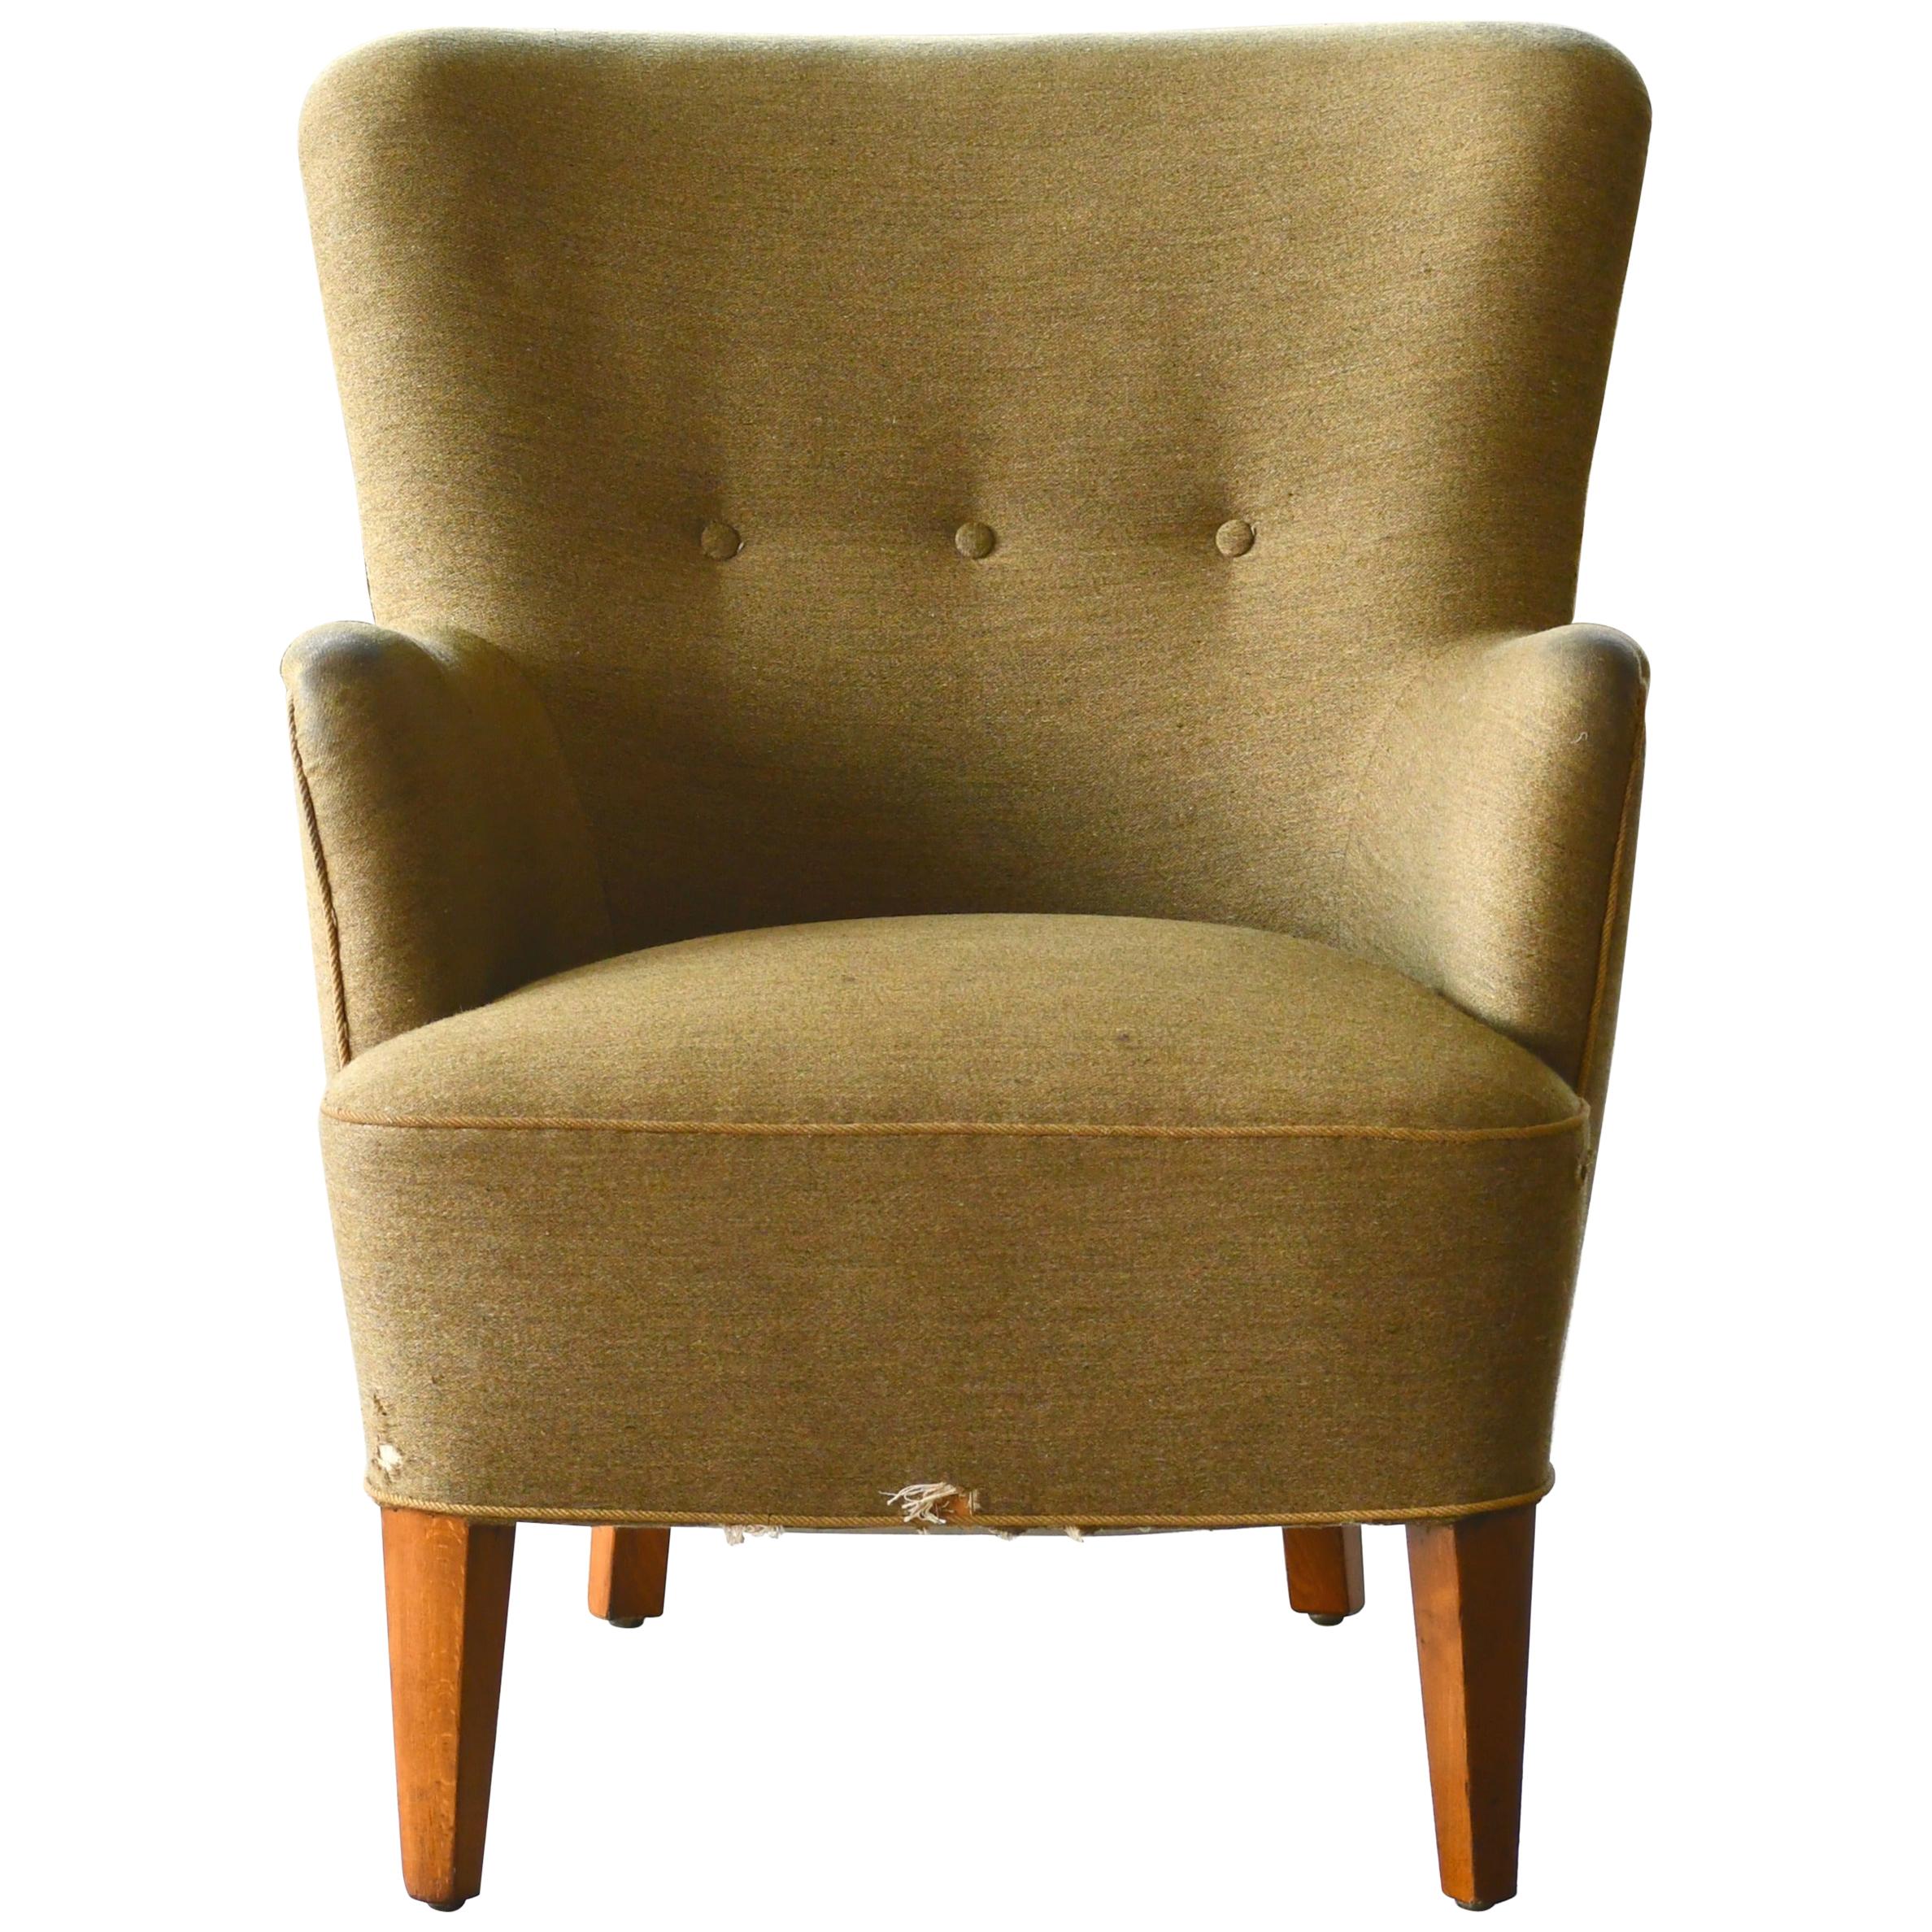 Peter Hvidt Orla Molgaard Style Classic Danish 1950s Lounge Chair